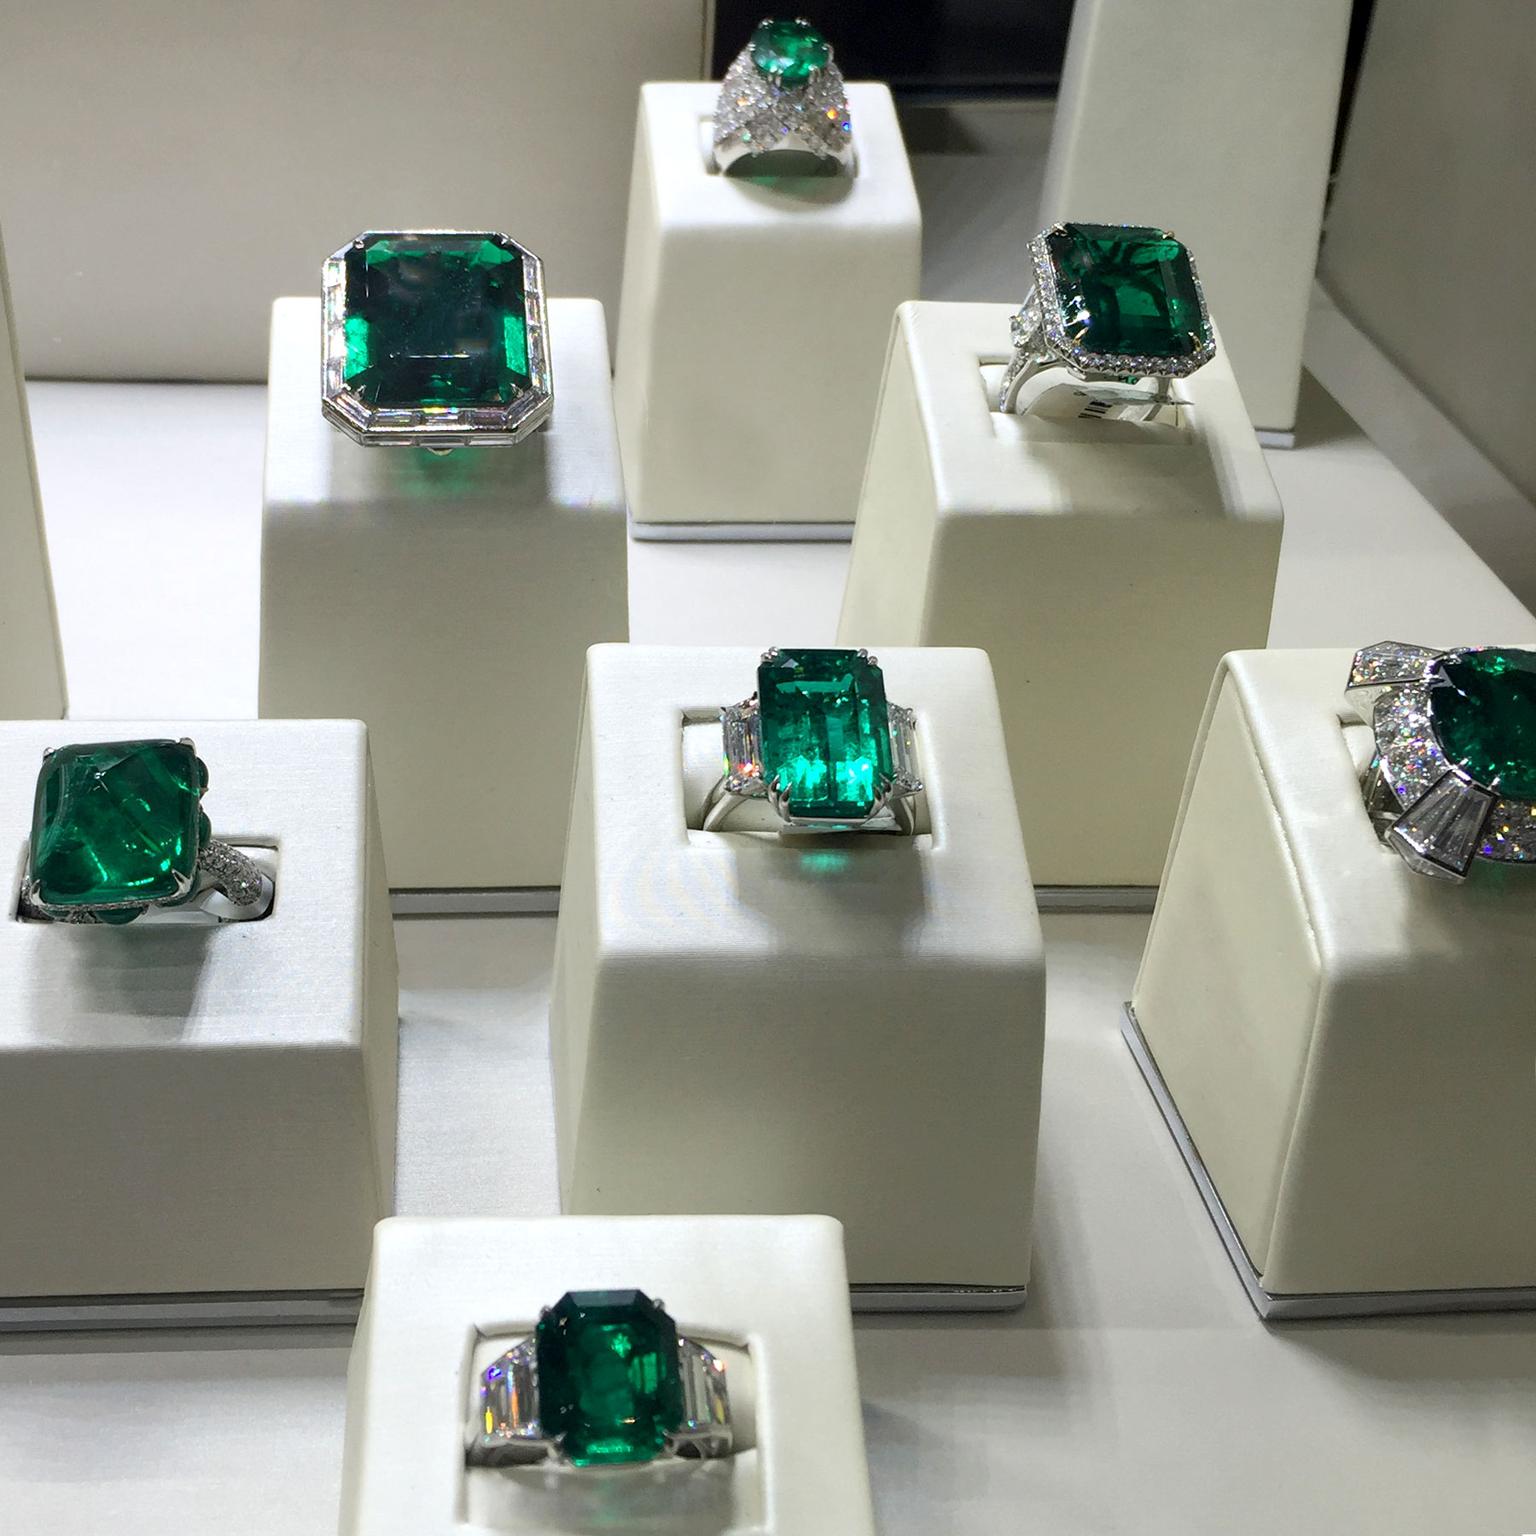 Jacob & Co emerald rings at Baselworld